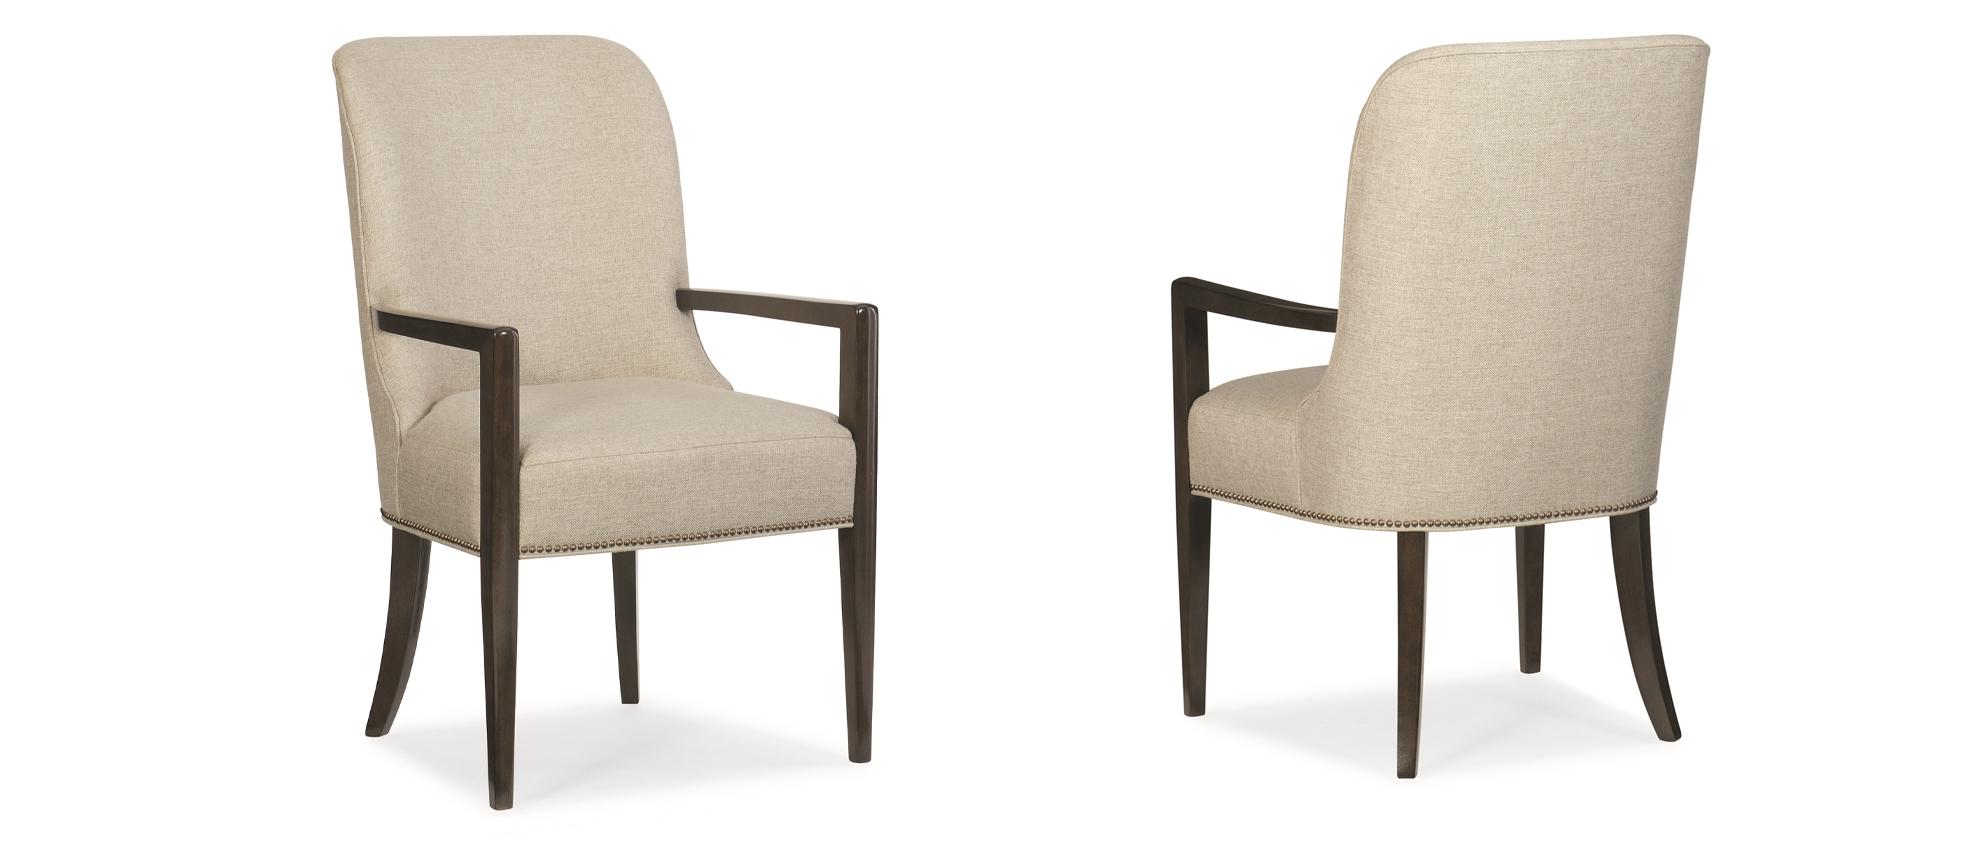 Modern Dining Arm Chair Set STREAMLINE ARM CHAIR M022-417-271-Set-2 in Brown, Beige Fabric